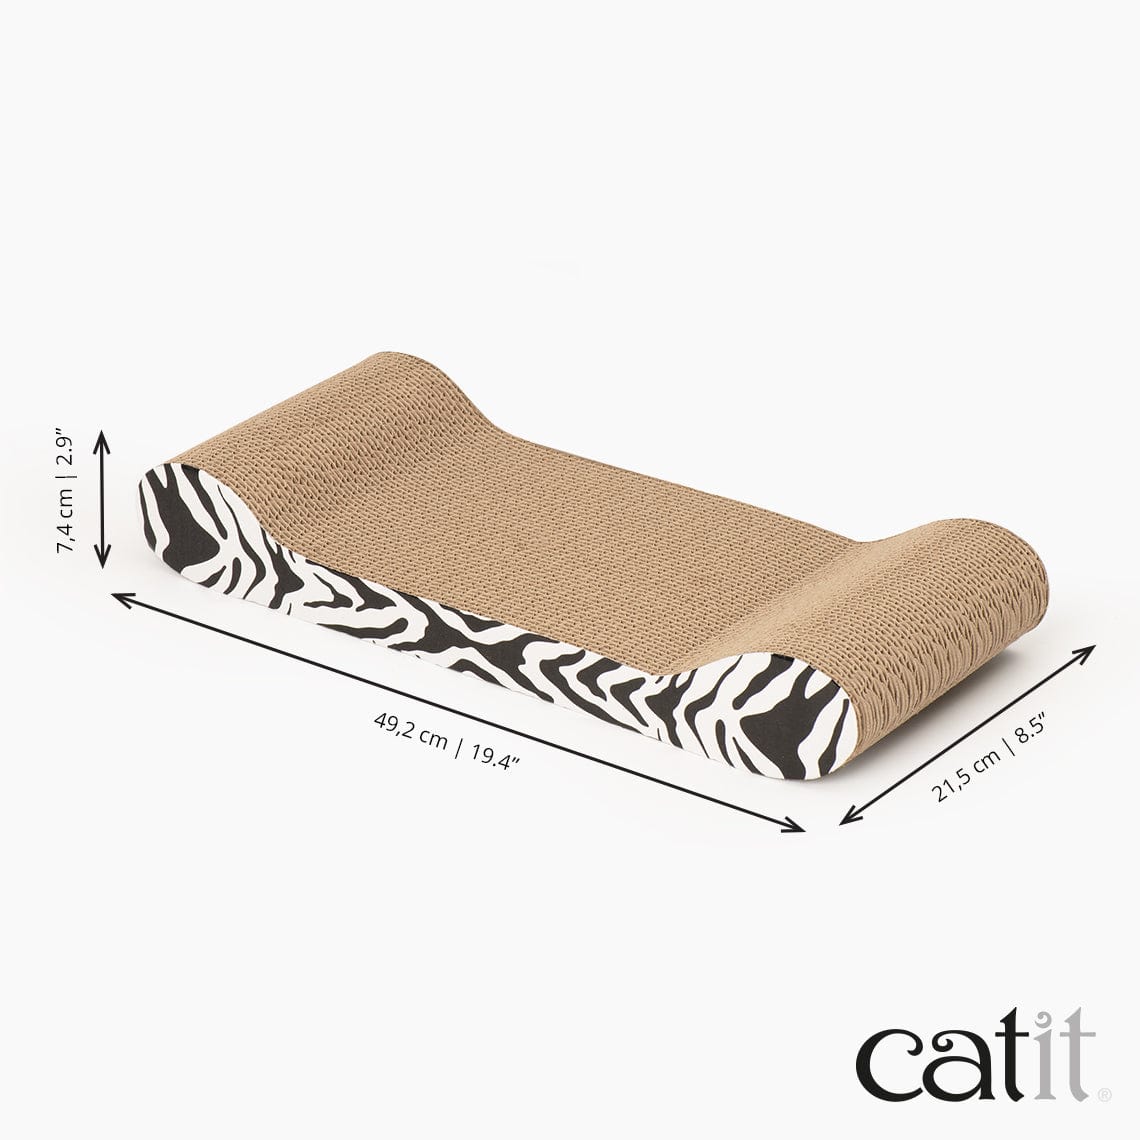 Catit Scratcher with Catnip – White Tiger